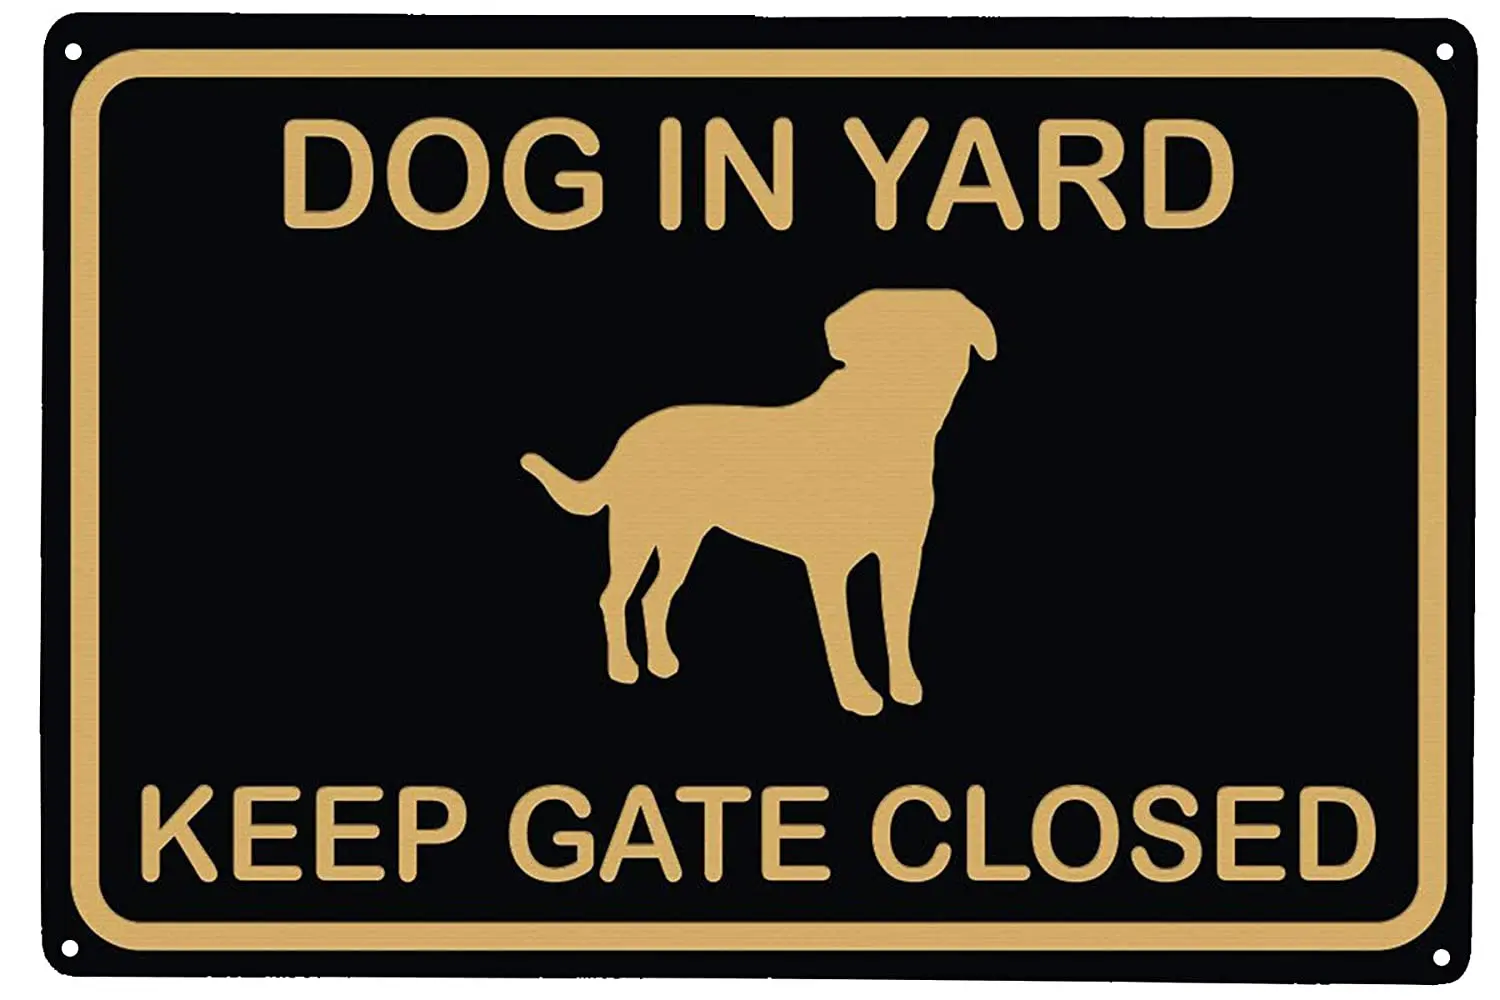 

LASMINE Dog in Yard Keep Gate Closed Wall Door Sign Please Keep Gate Closed Vintage Retro Metal Indoor Outdoor Road Firm Water